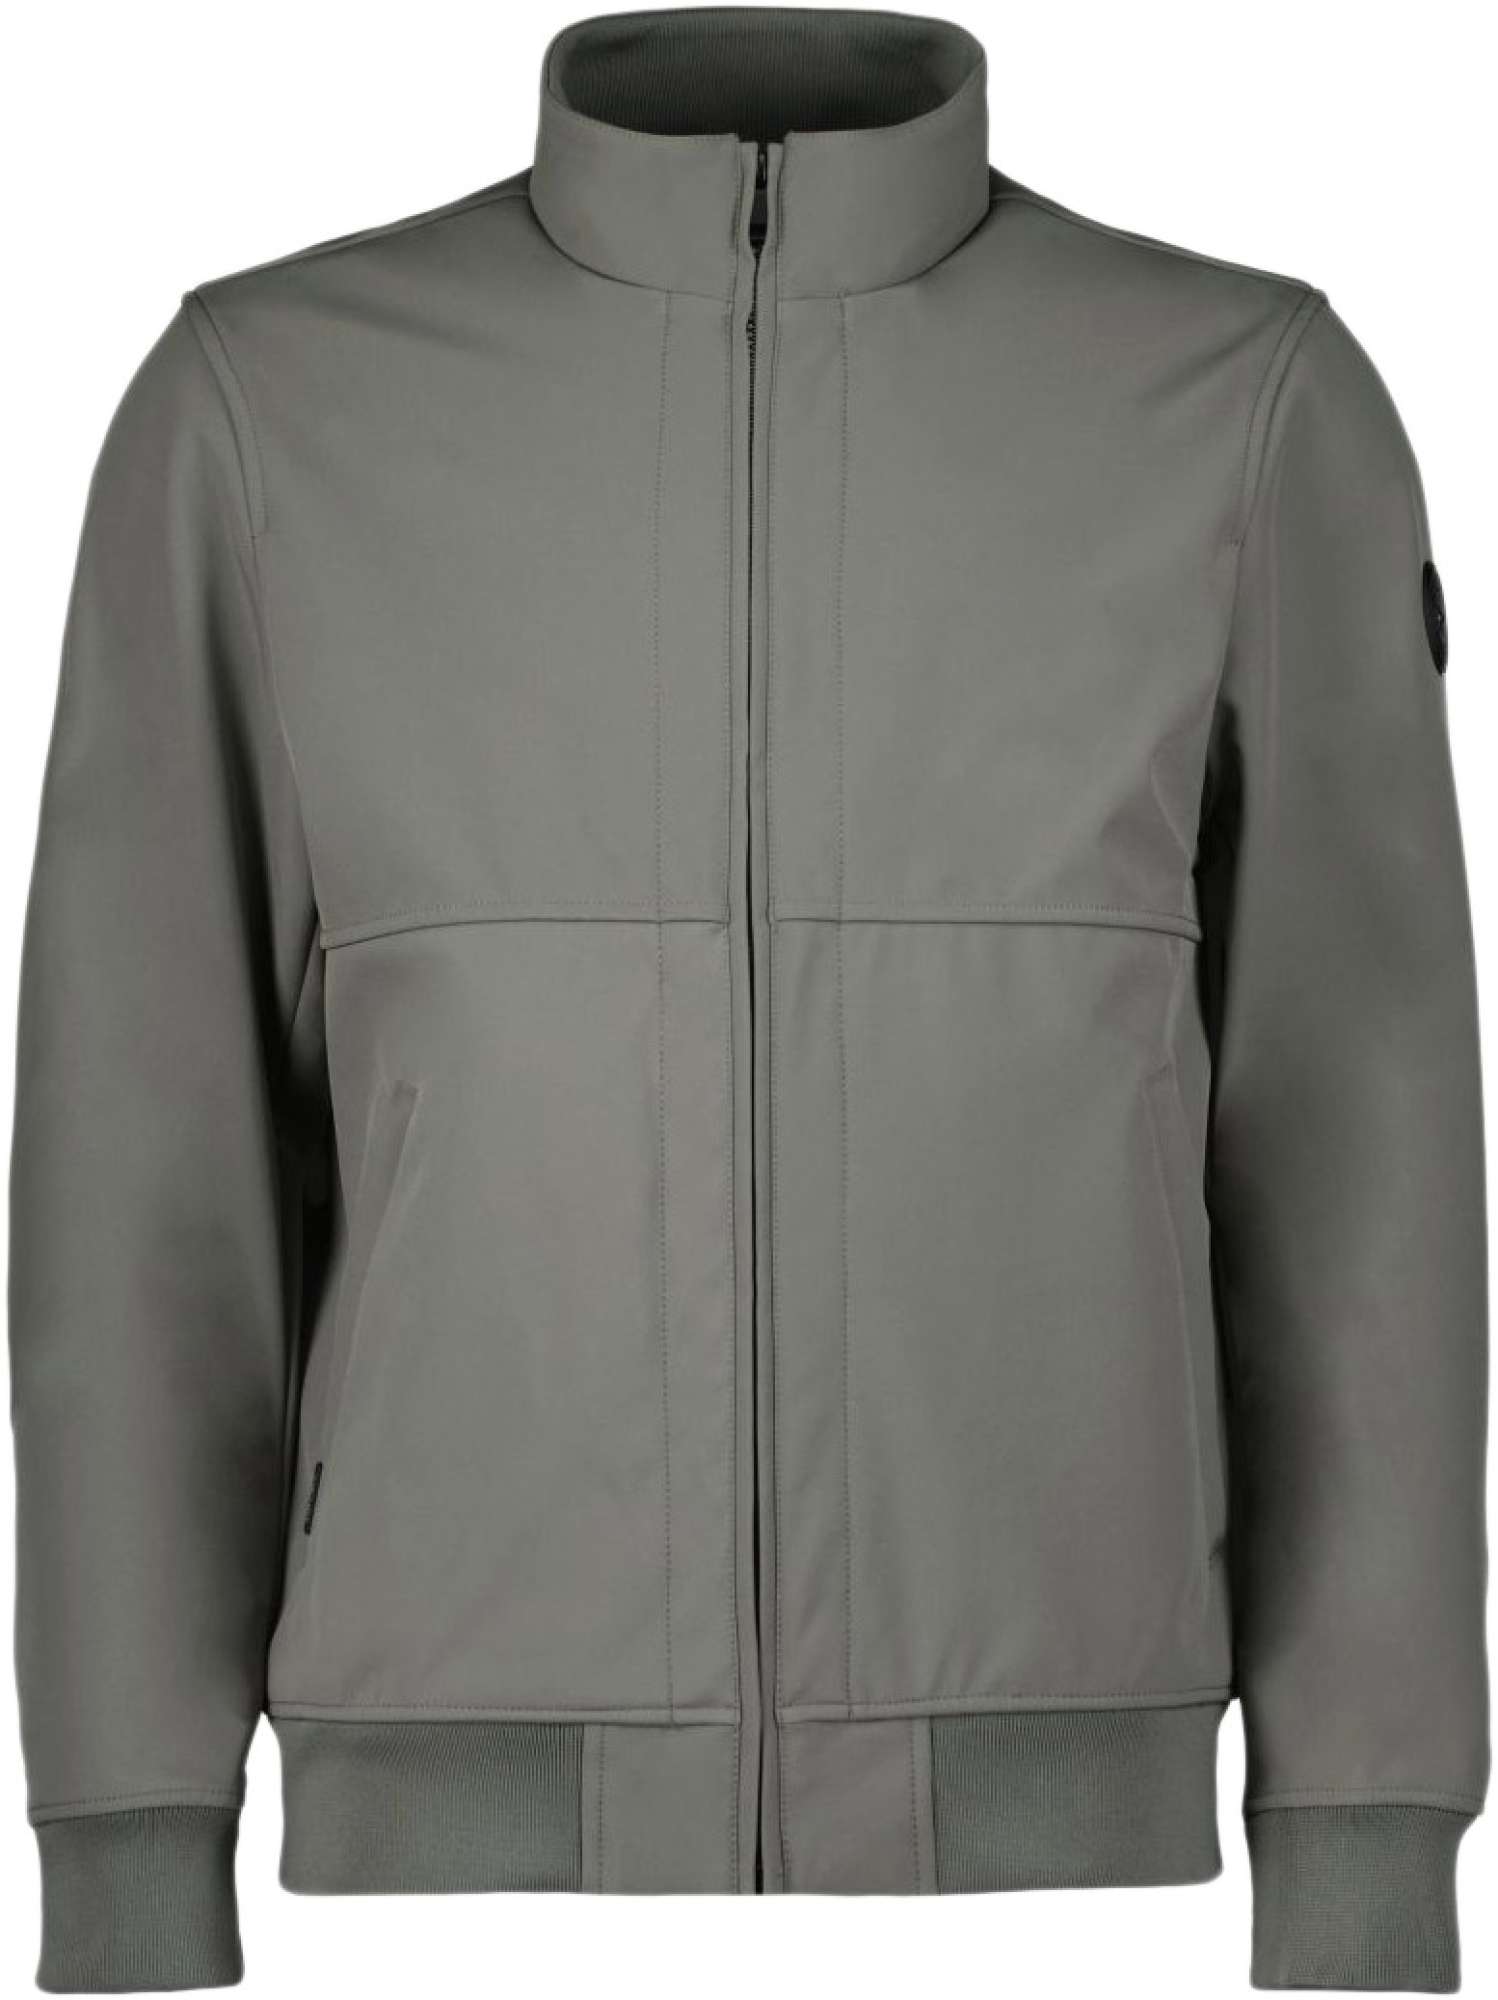 Afbeelding van Airforce Softshell jacket castor grey